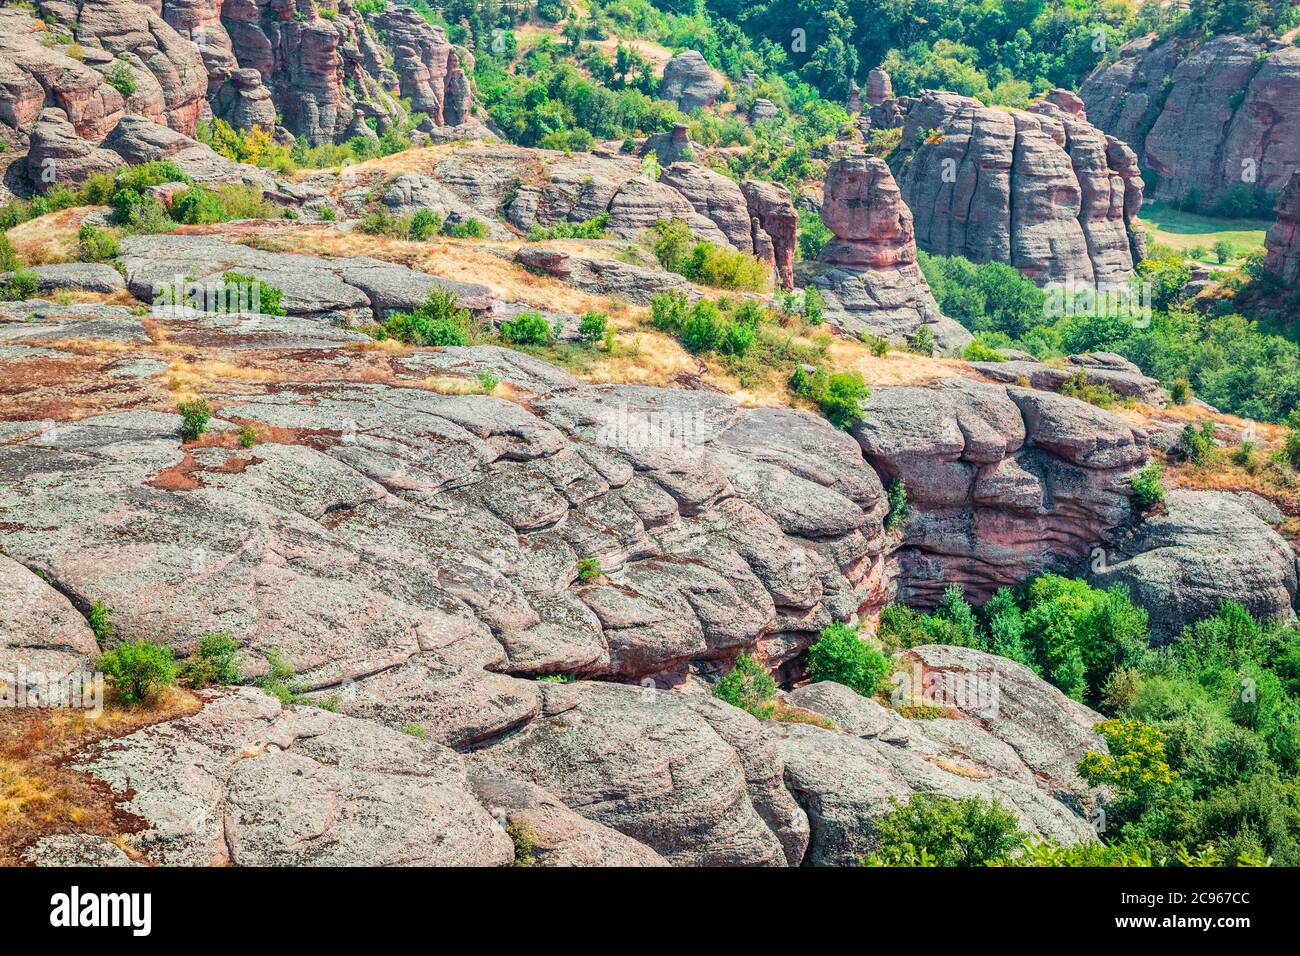 The Belogradchik Rocks - natural landmark in the area of Belogradchik, Balkan Mountains, northwest Bulgaria Stock Photo